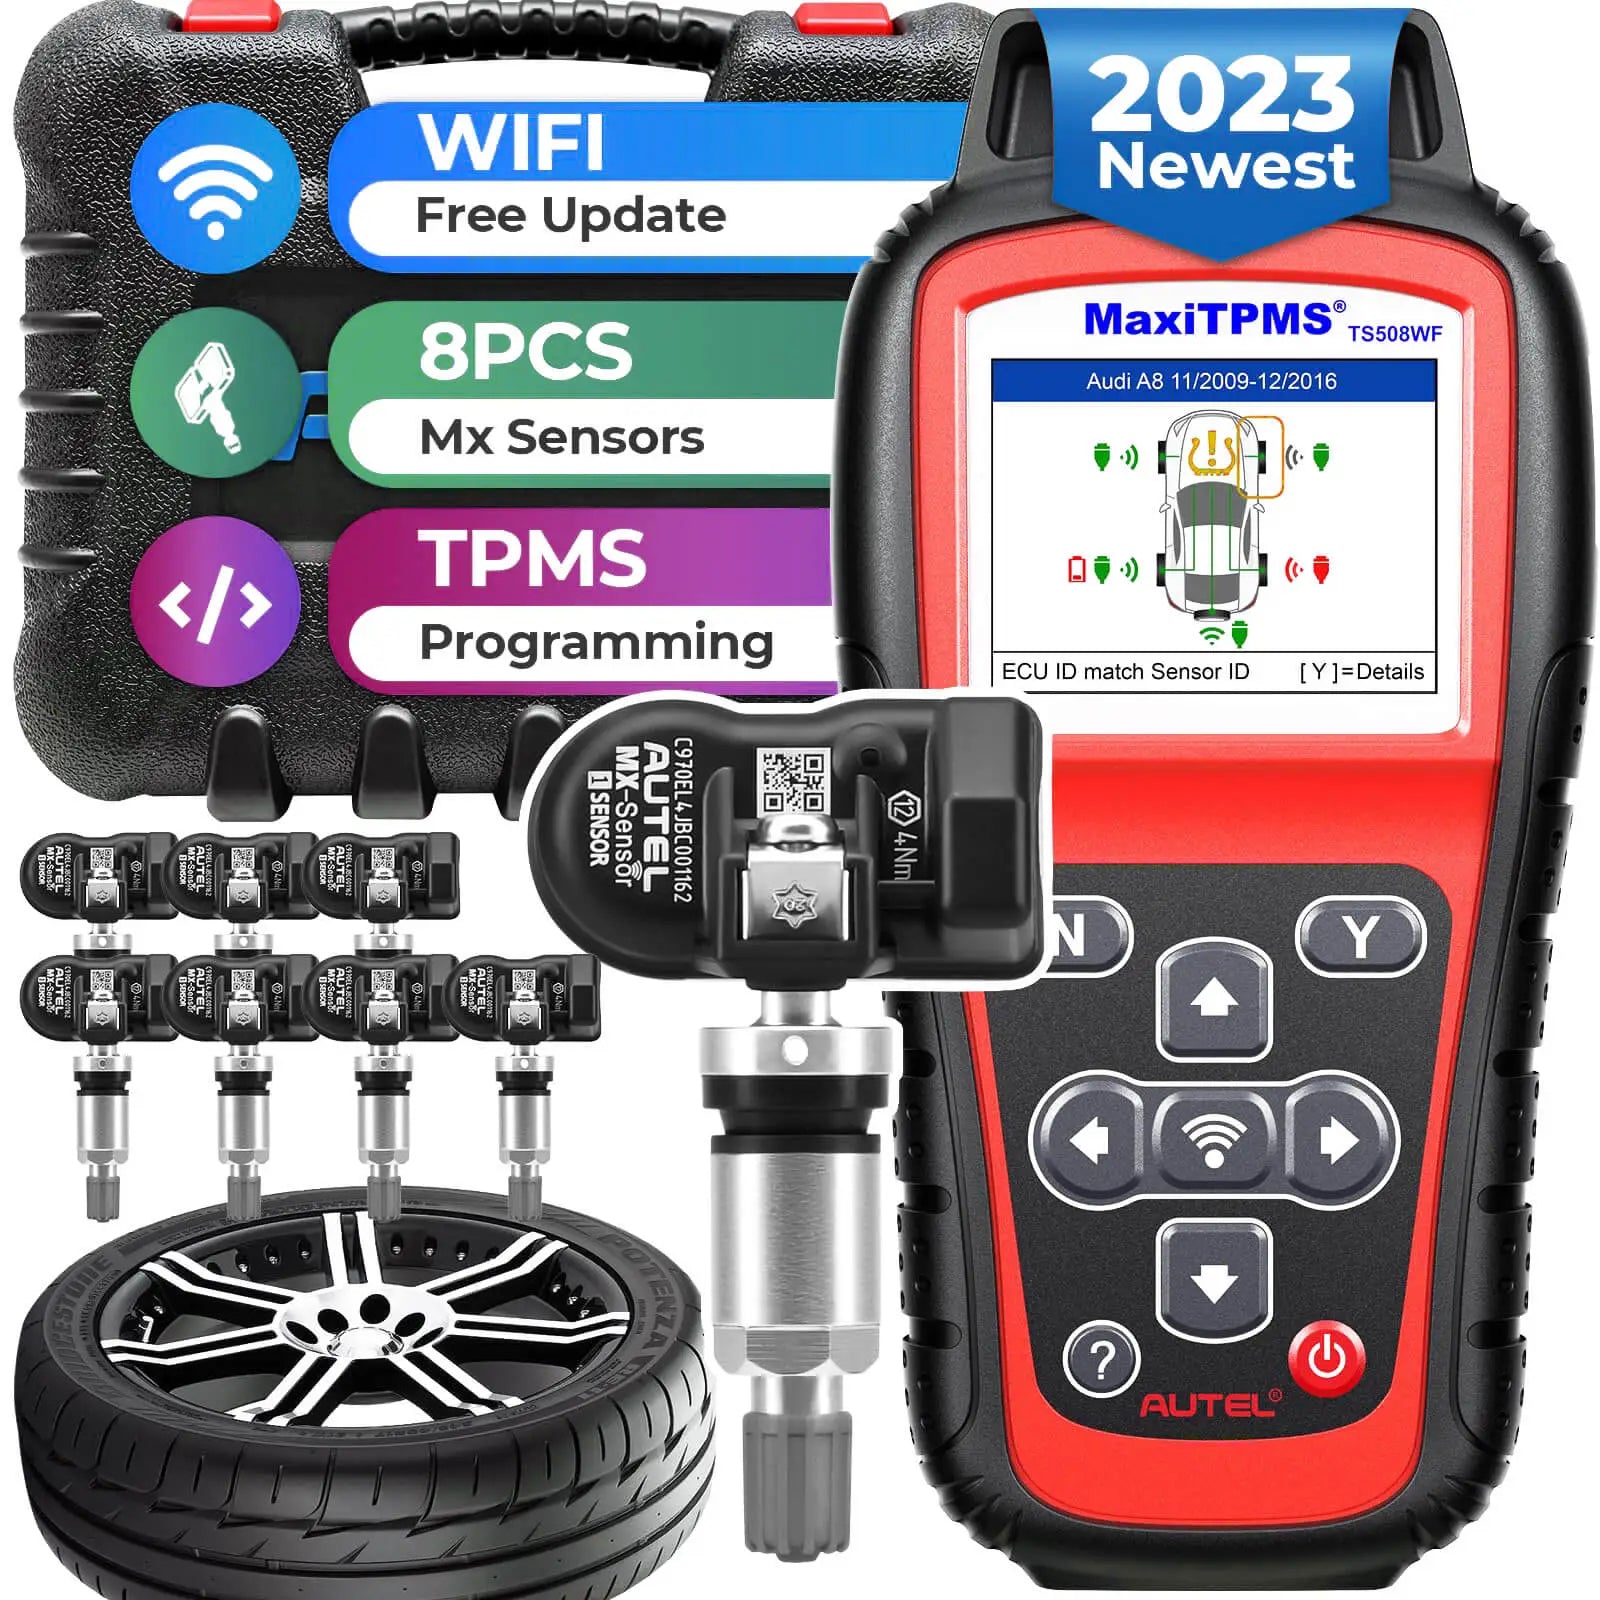 Autel MaxiTPMS TS508WF TPMS Relearn Tool, 2024 Newest WiFi Upgrade of  TS508, TS501, TS408, Activate/Relearn All Sensors, Program MX-Sensors